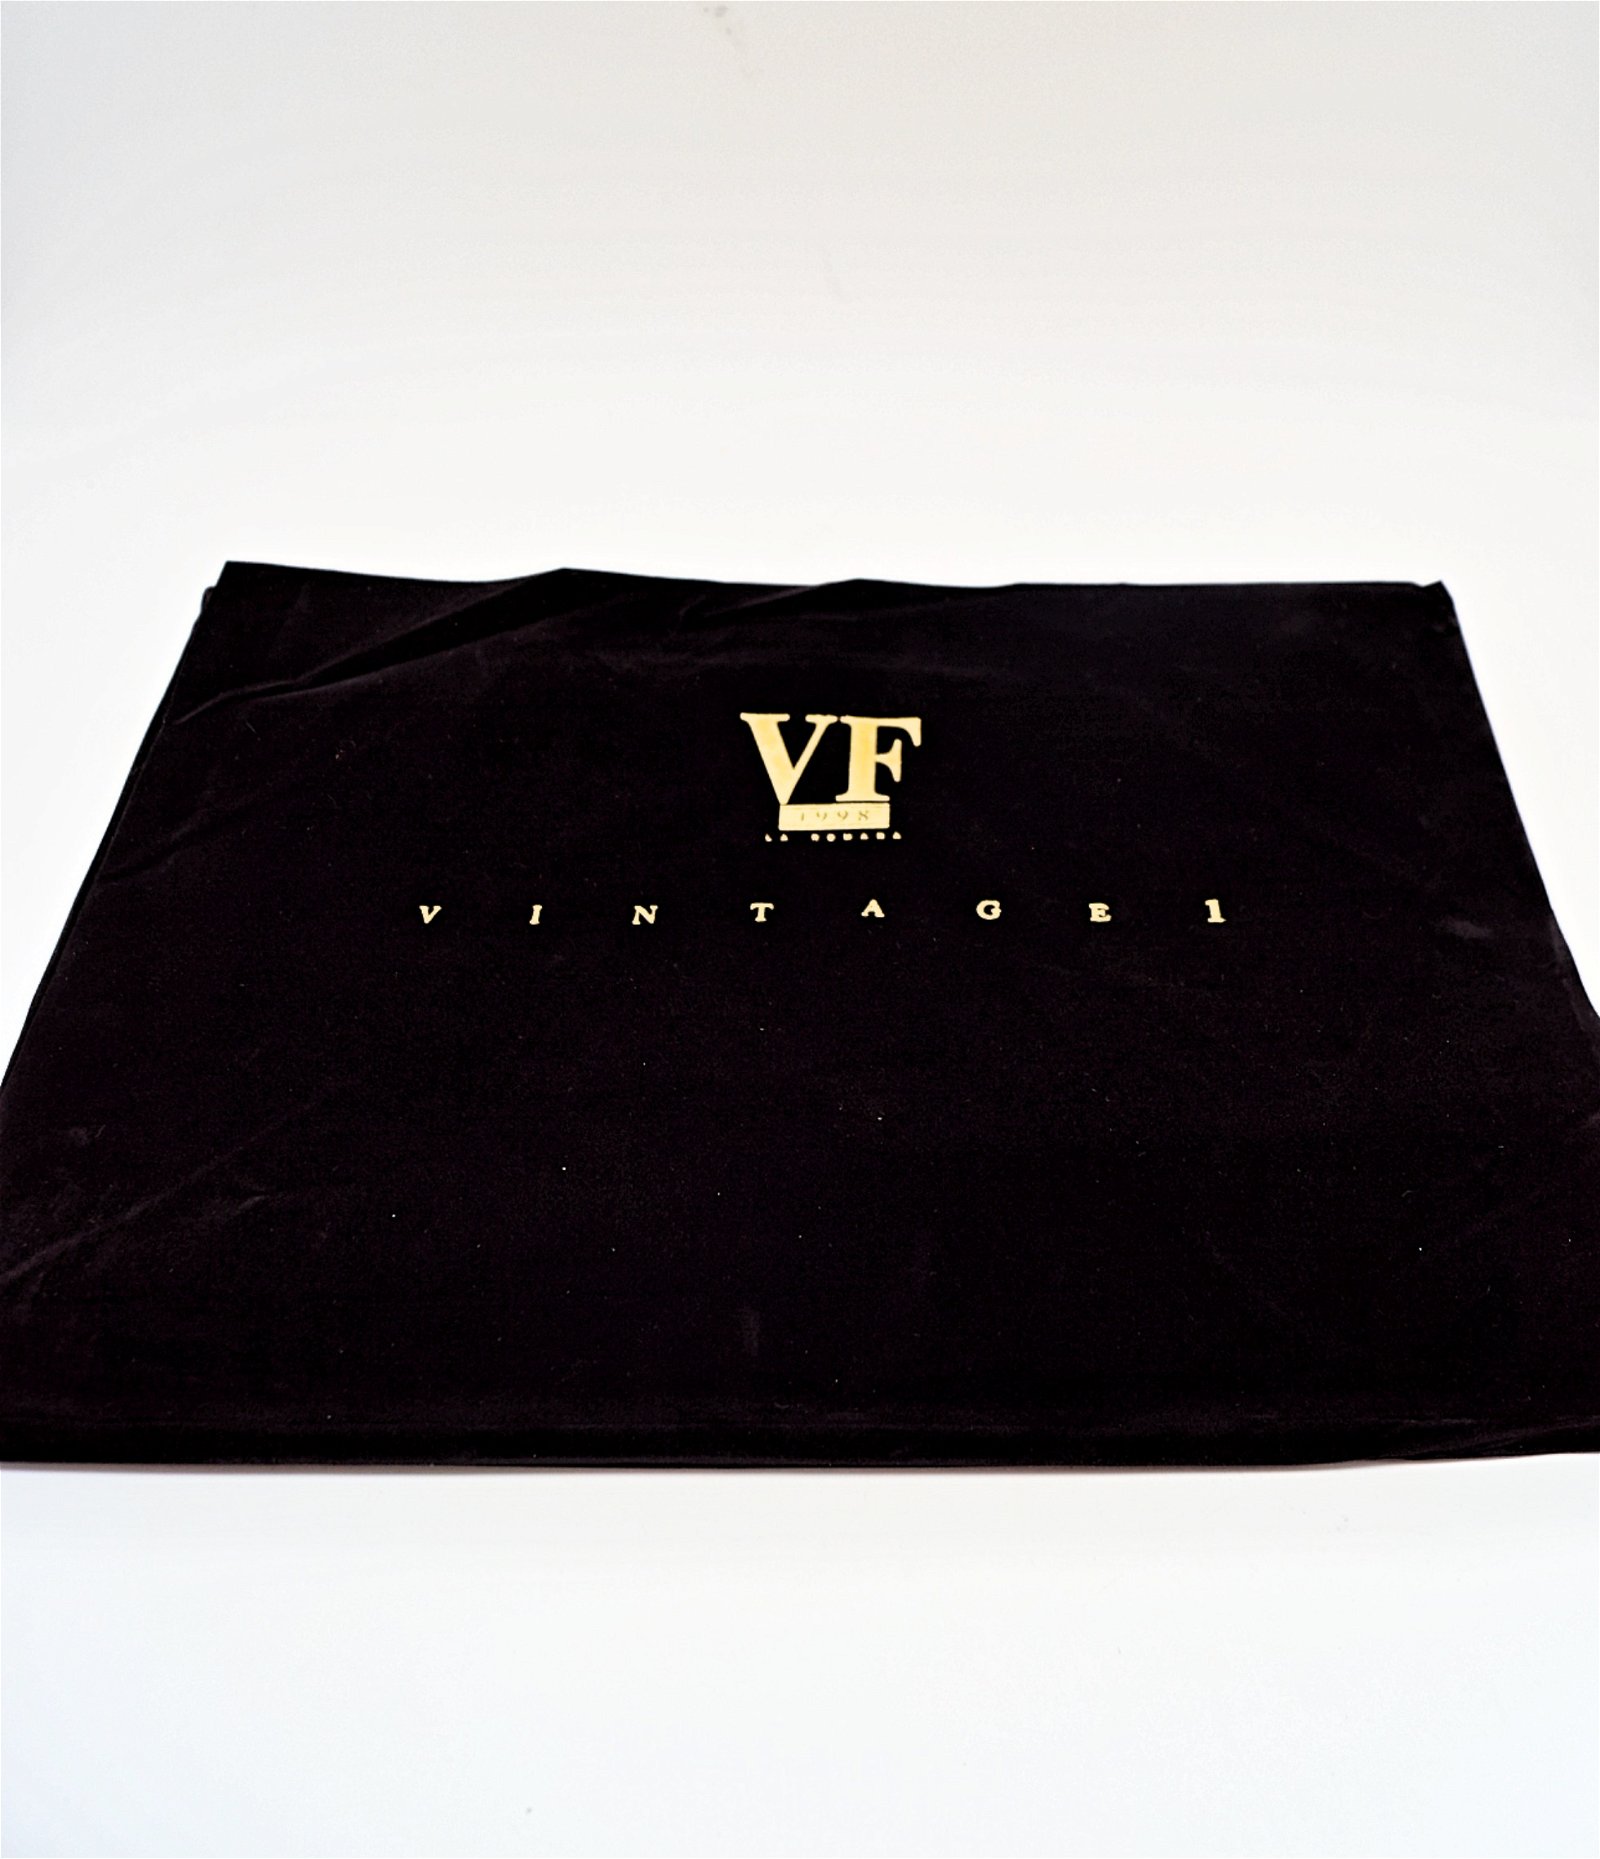 Vegafina Vintage 1 1998 VF40 + VF42L Box